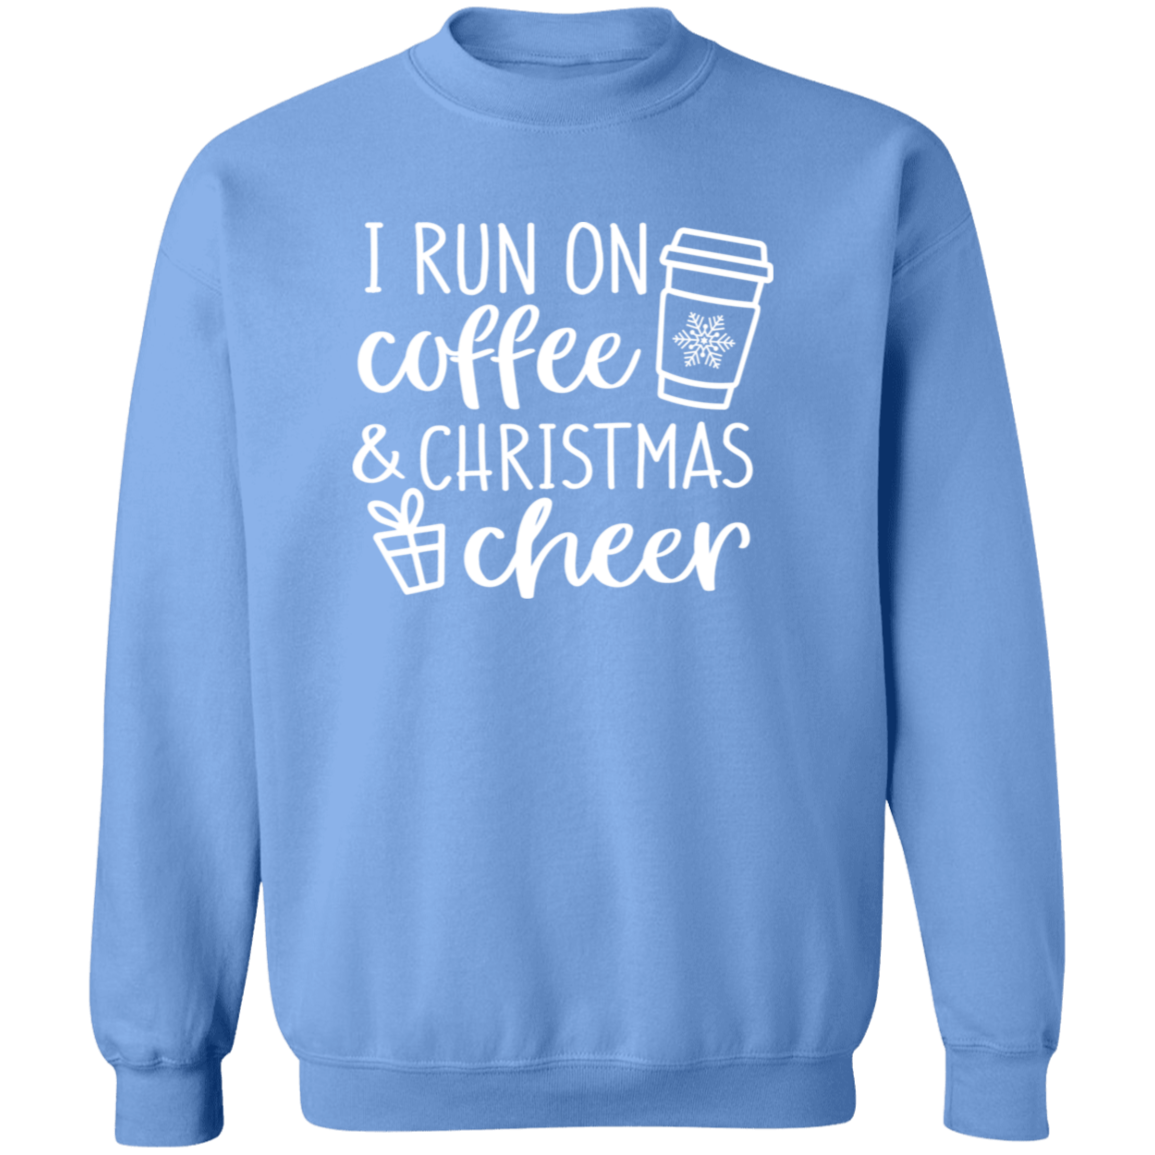 I Run On Coffee And Christmas Cheer Sweatshirt